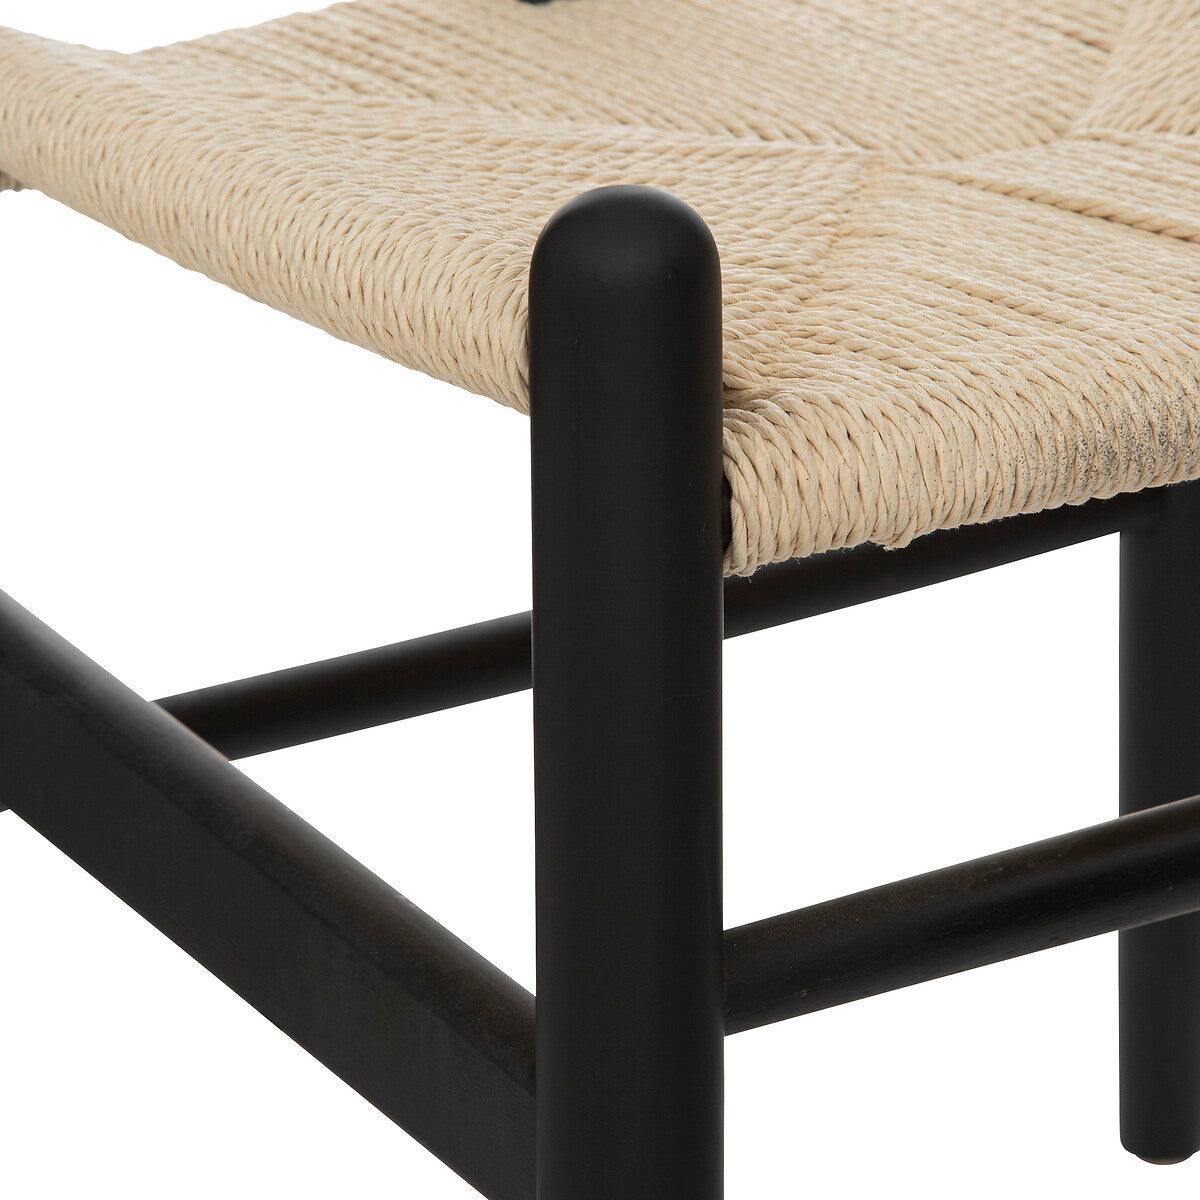 BEAU Amira wooden armchair - Set of 2 pieces - L54xD52xH76cm - Black